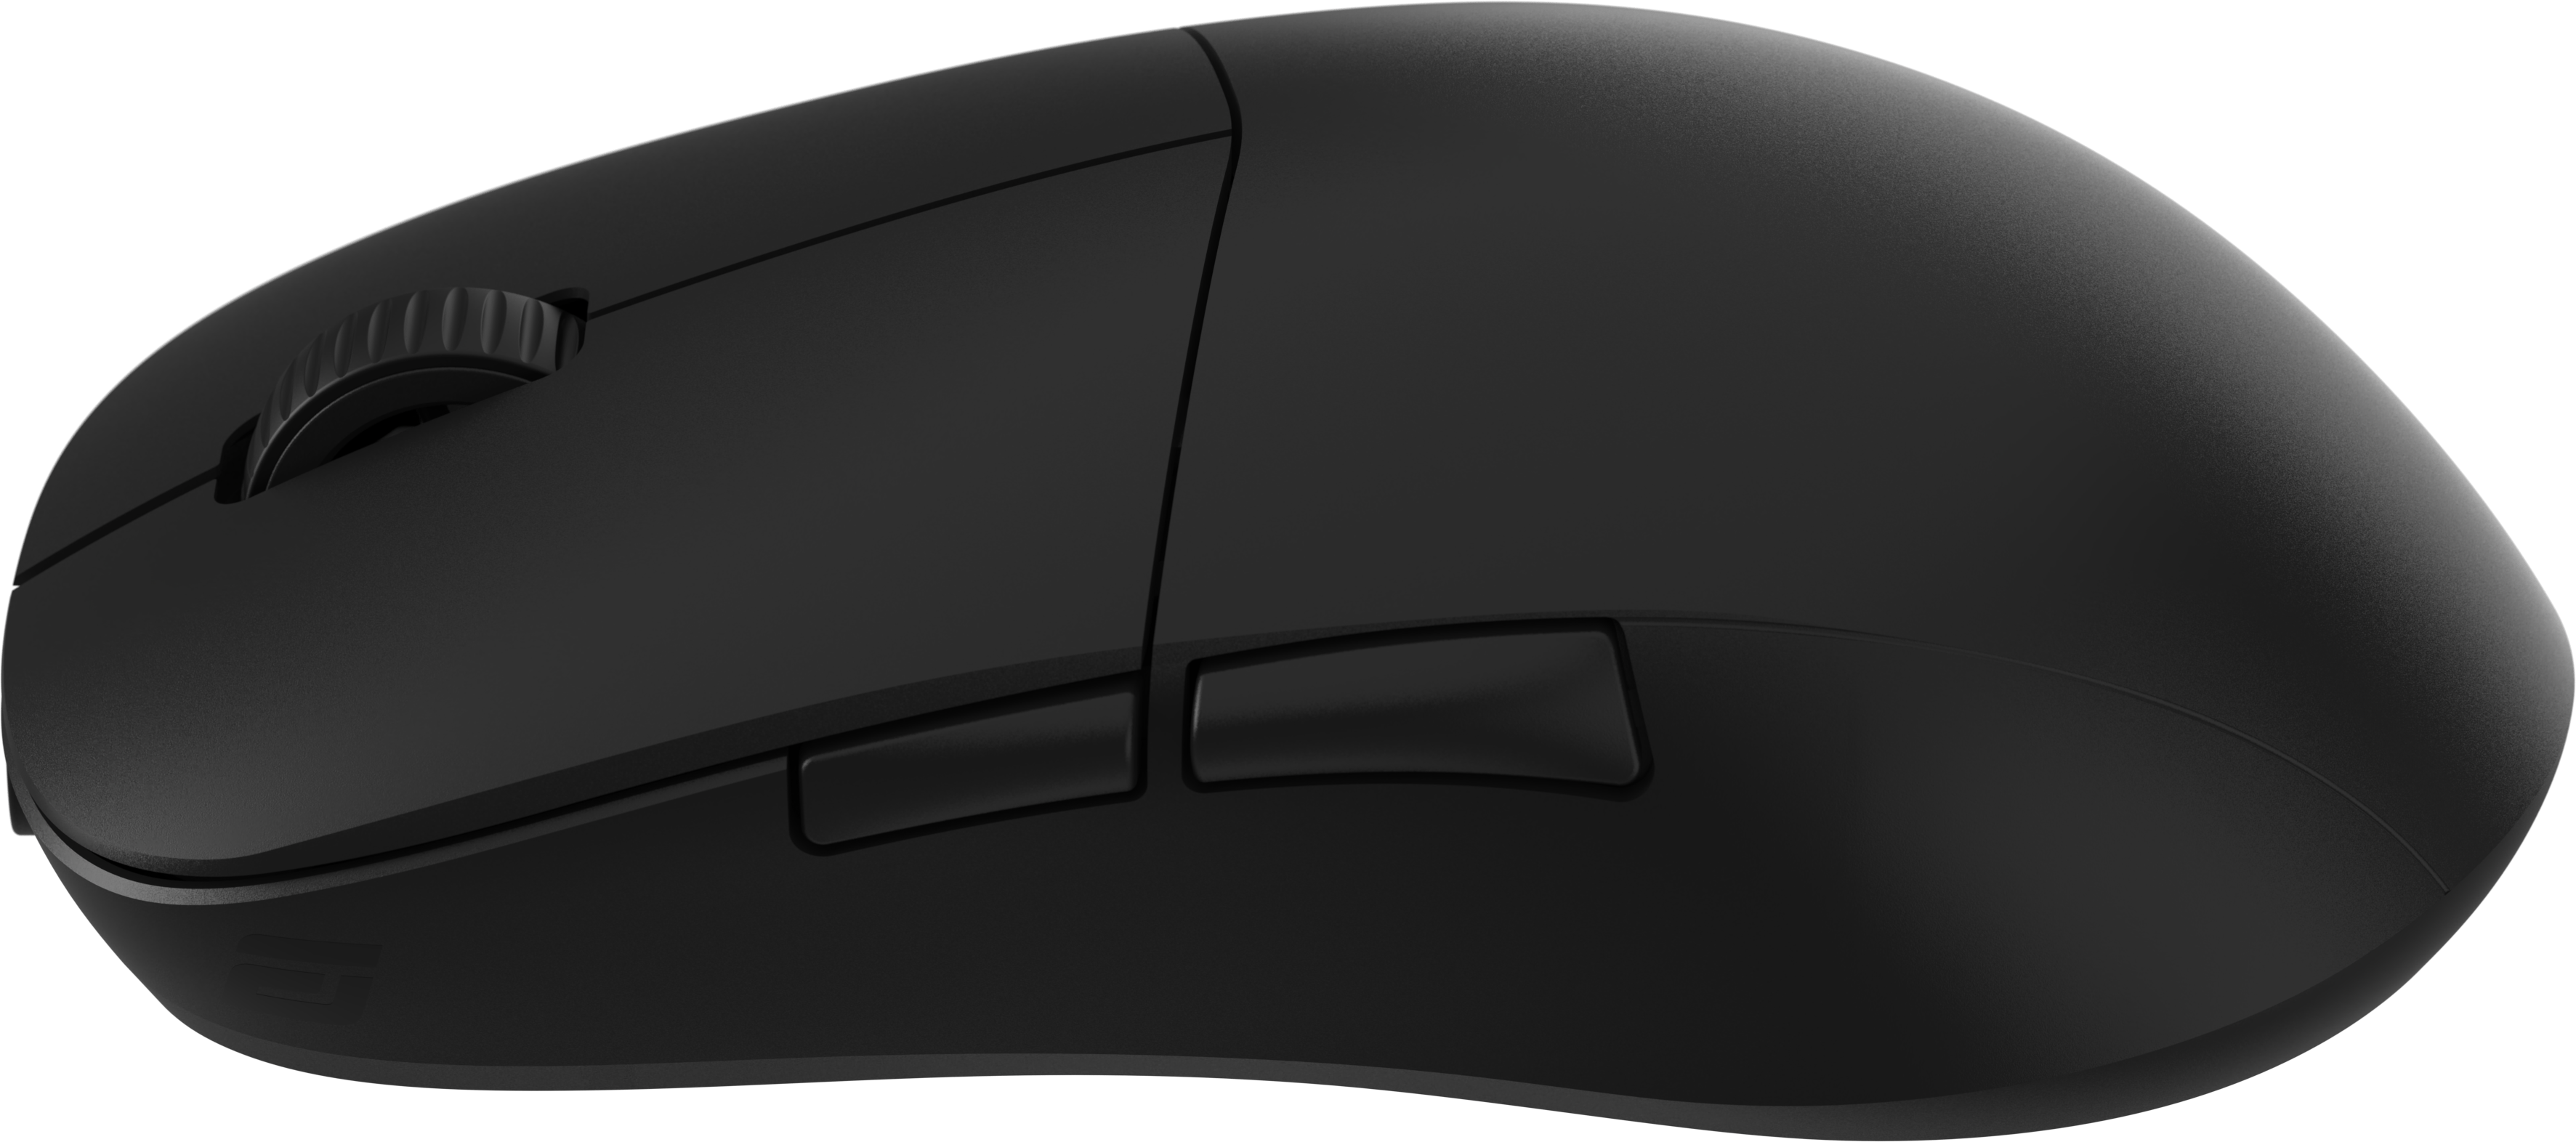 XM2w Wireless Gaming Mouse - Black | Endgame Gear